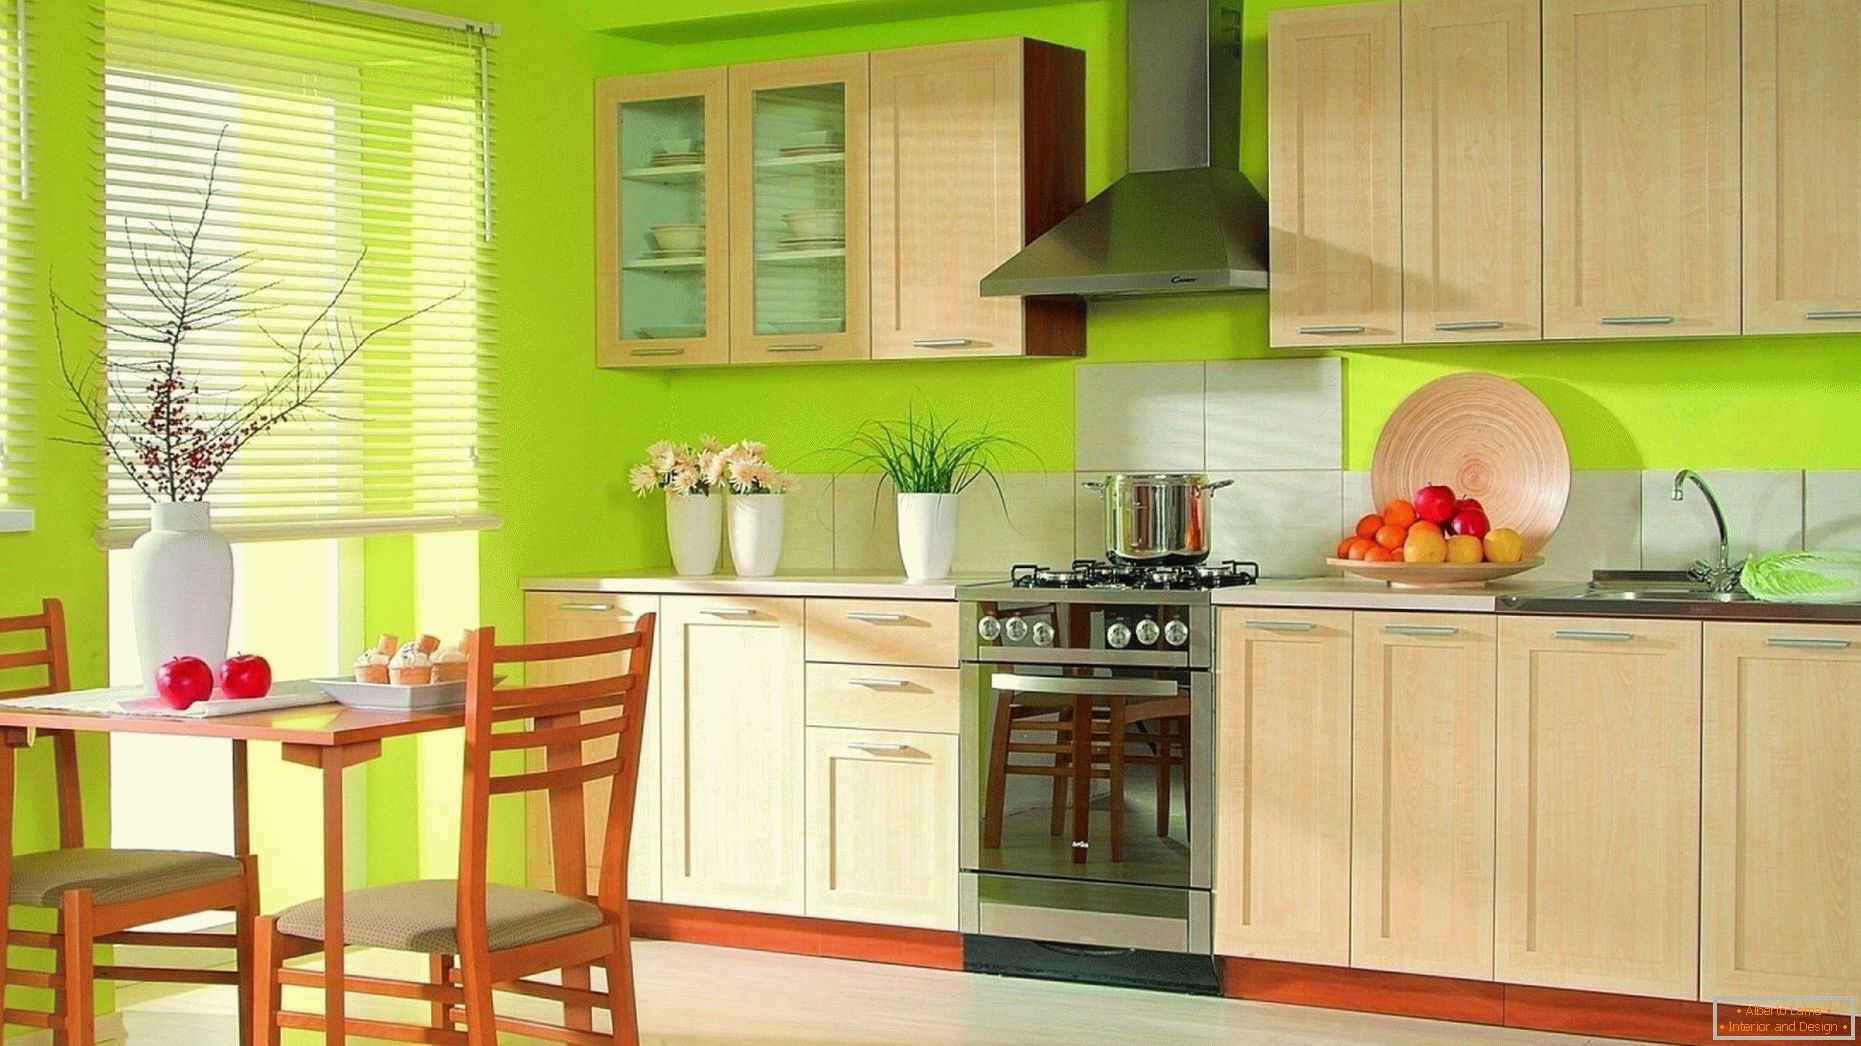 Kuchyňský design s kontrastními barvami